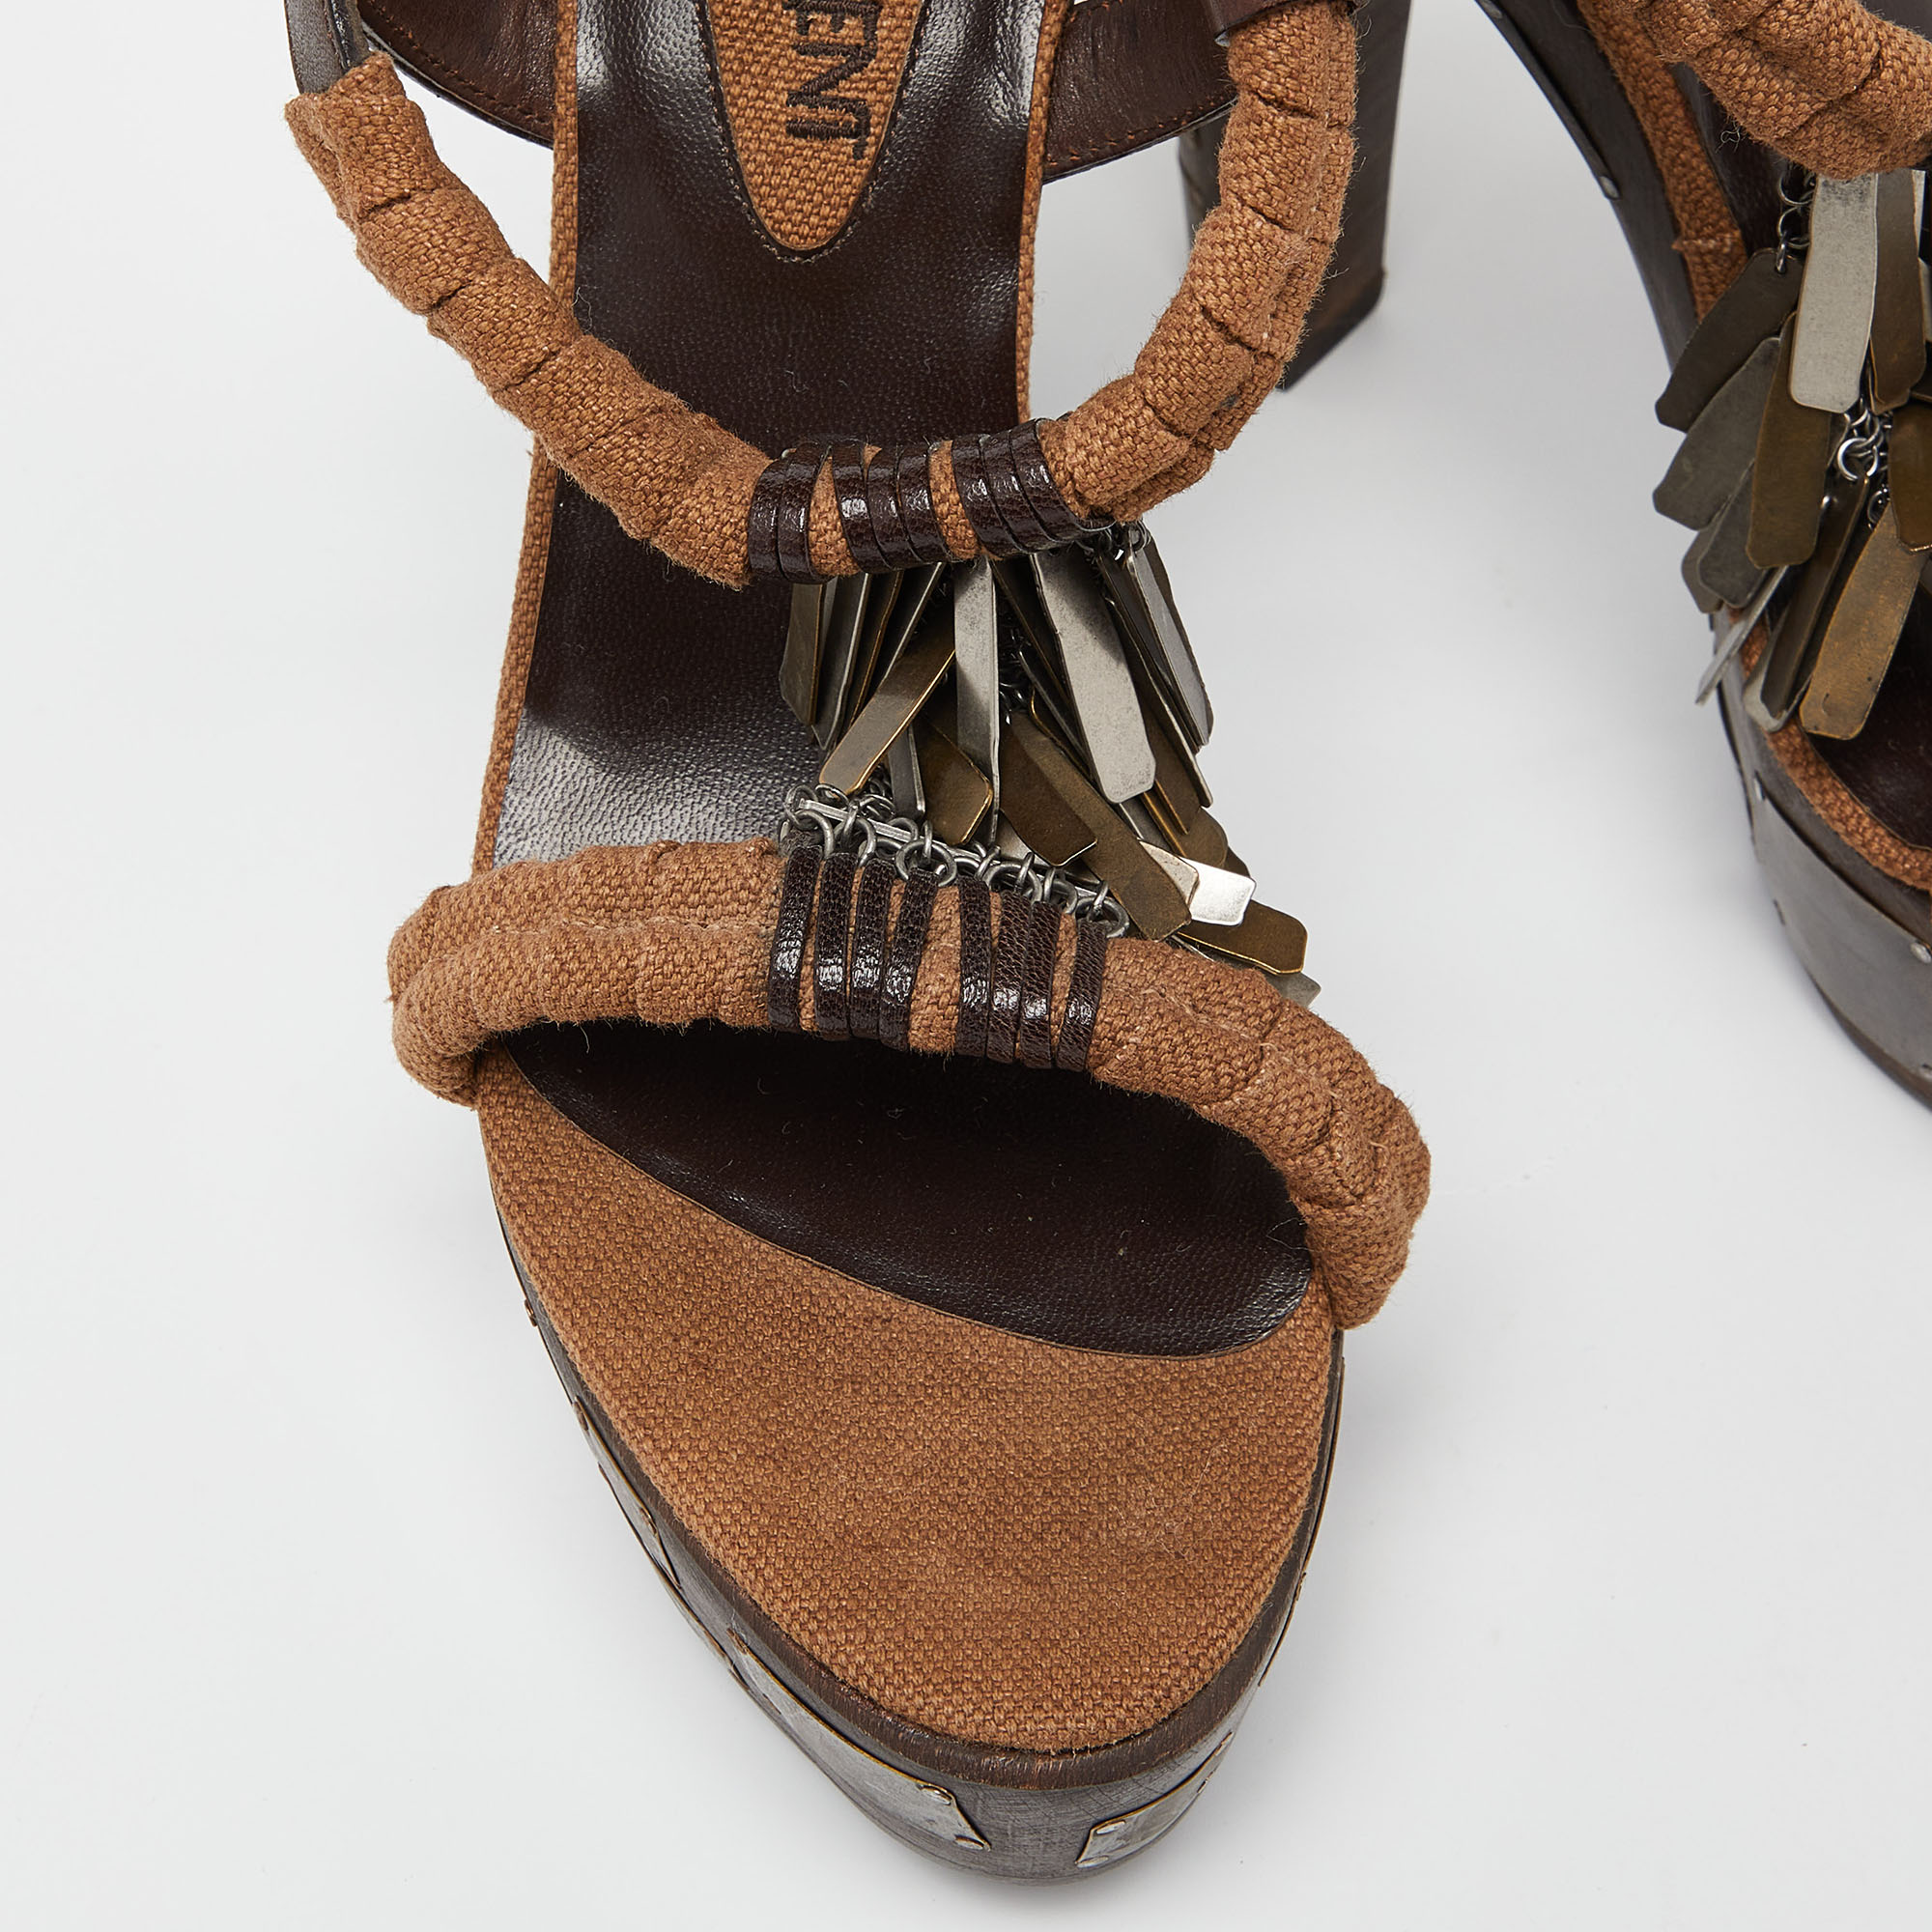 Yves Saint Laurent Brown Leather And Canvas Embellished Platform Ankle Strap Sandals Size 38